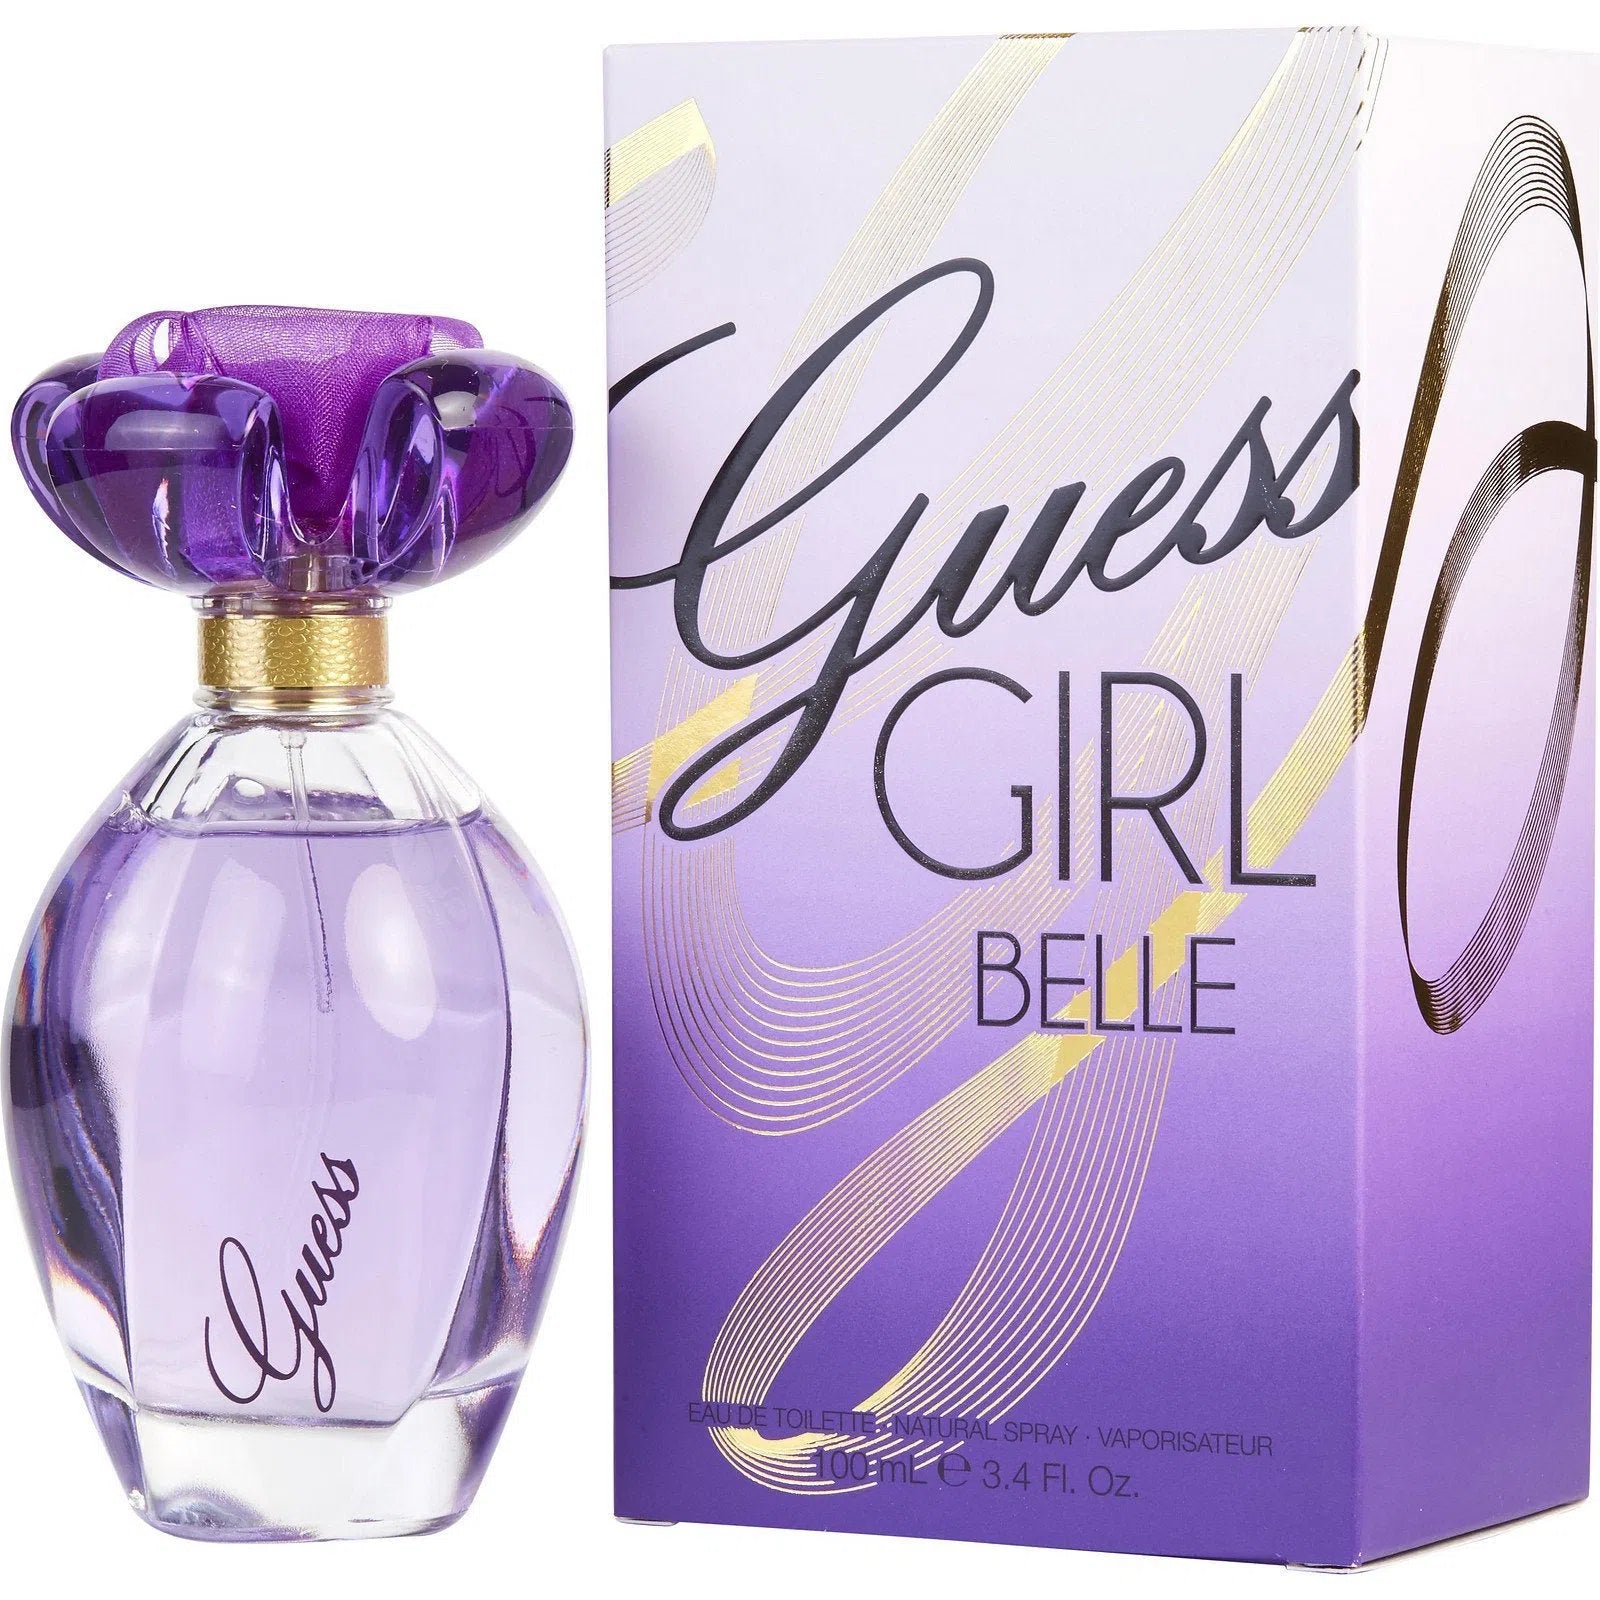 Perfume Guess Girl Belle EDT (W) / 100 ml - 085715321411- Prive Perfumes Honduras